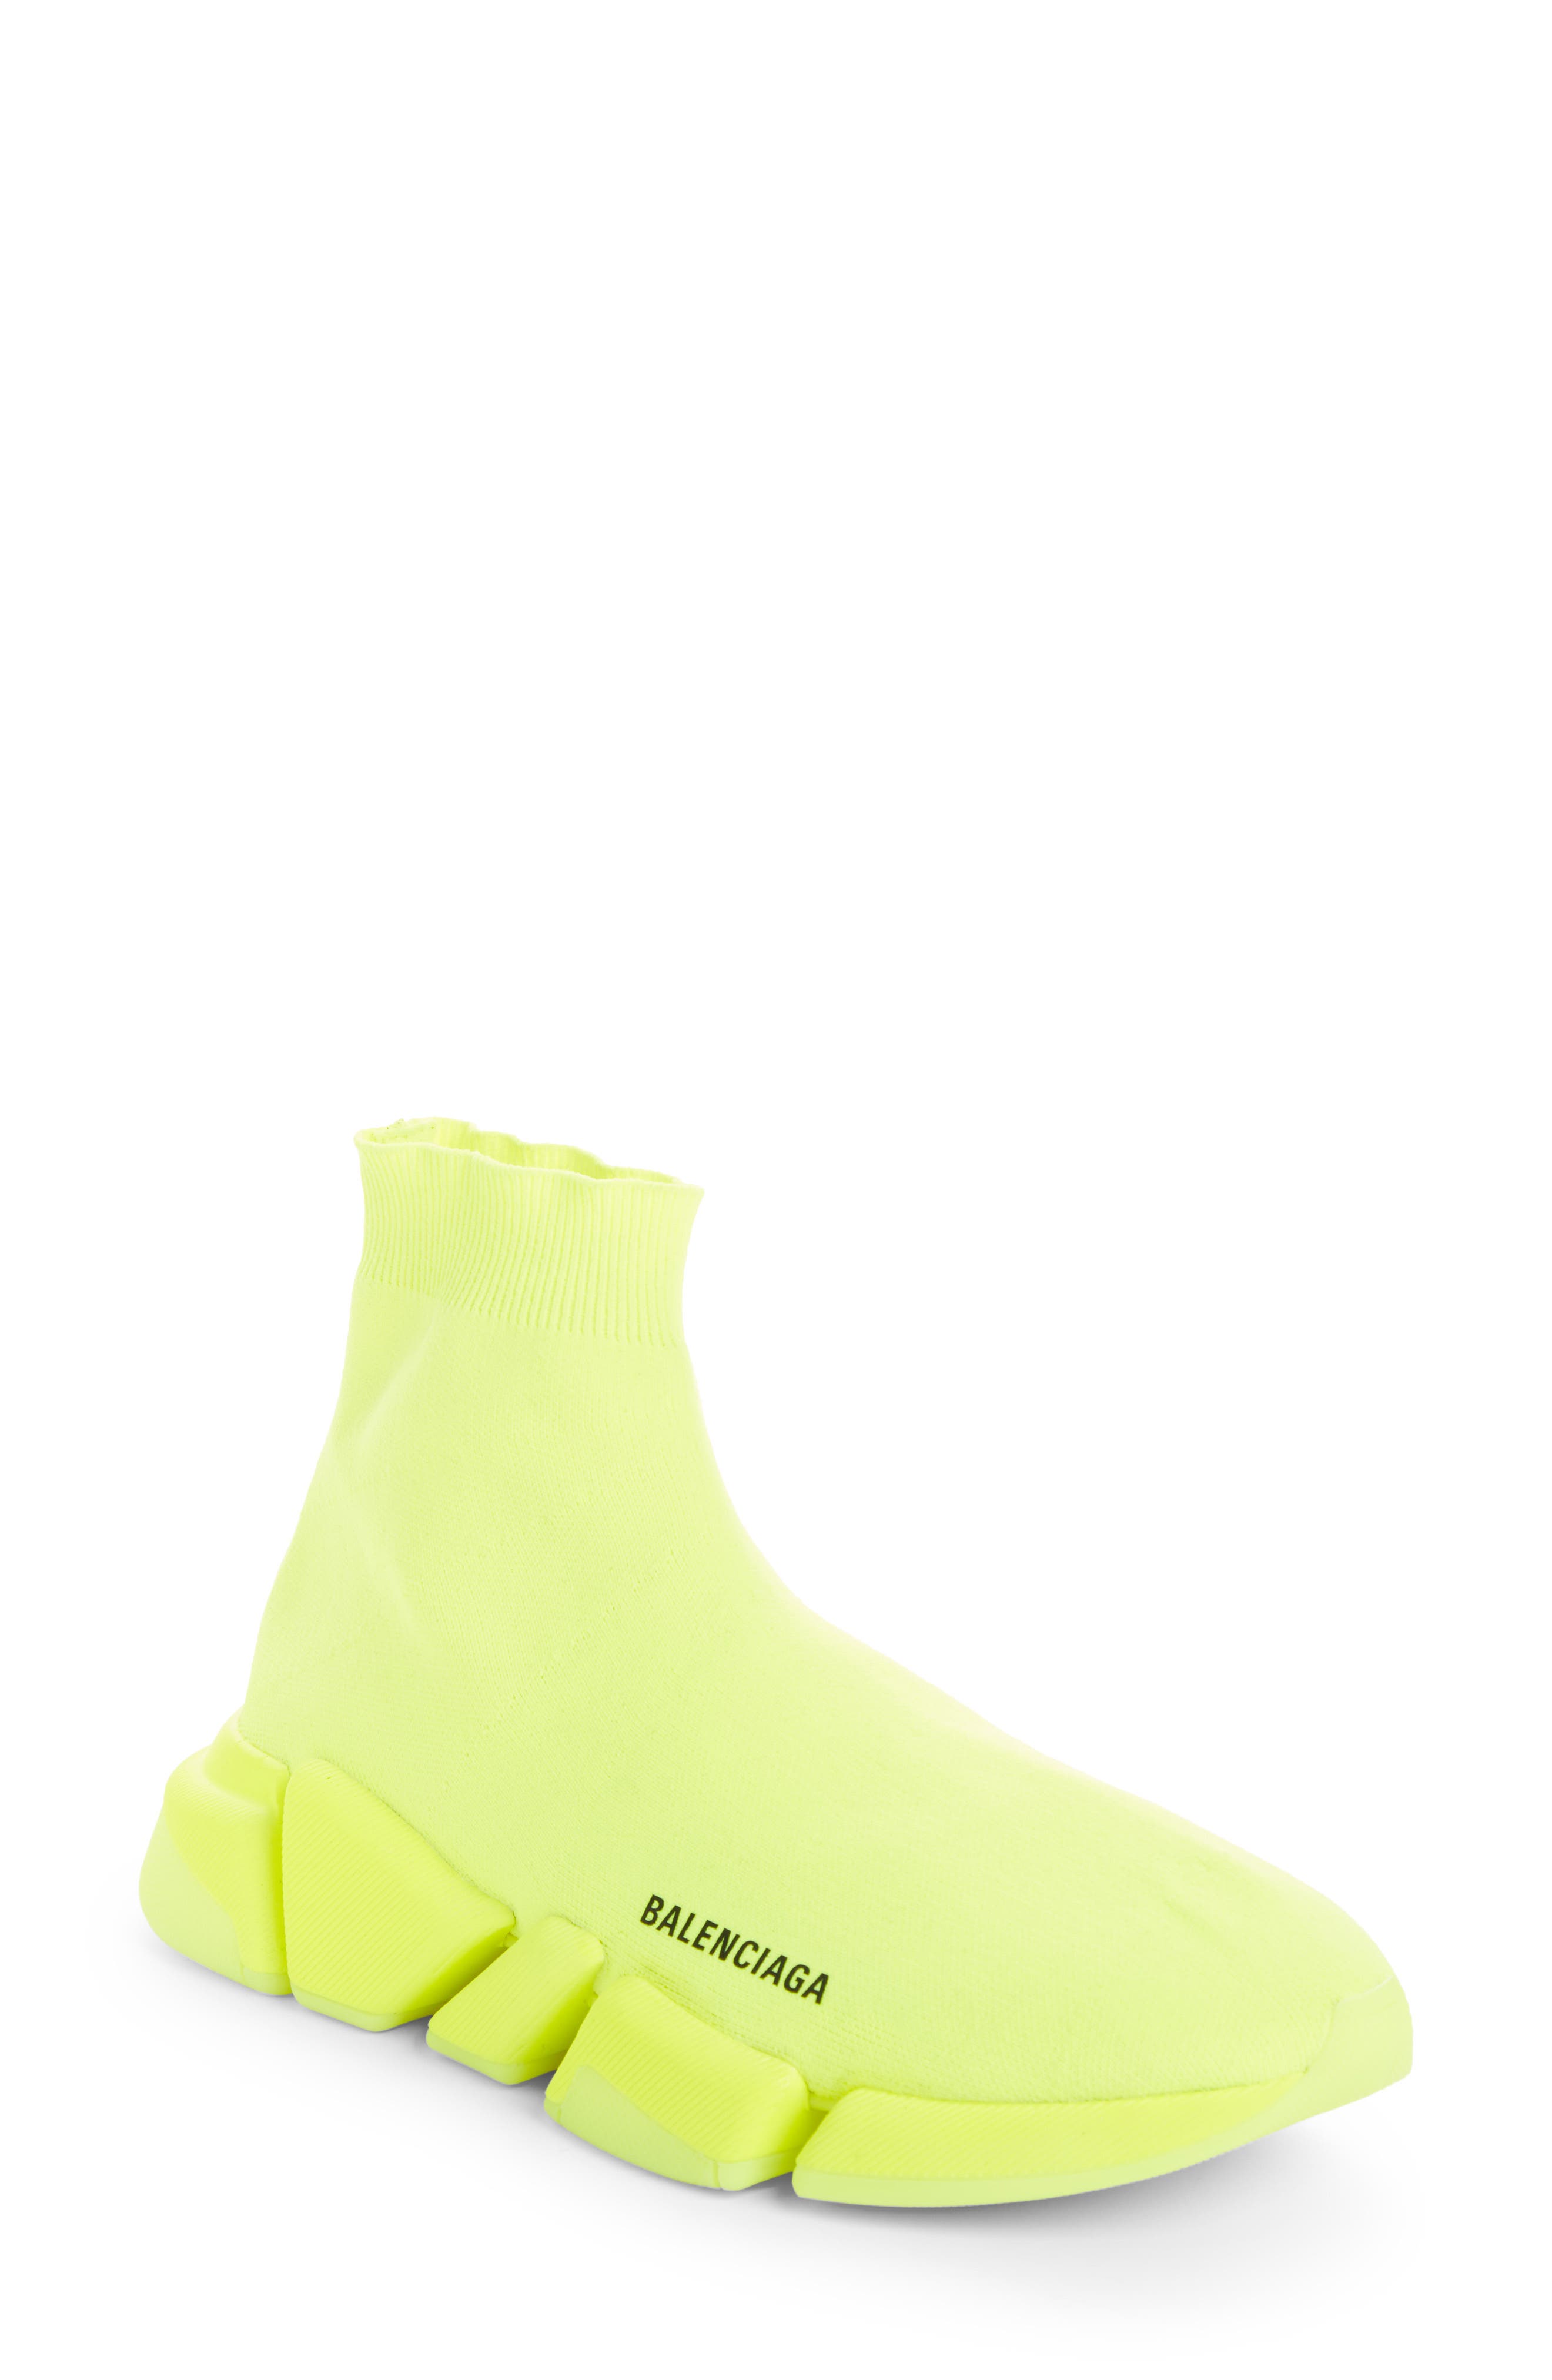 yellow designer shoes mens